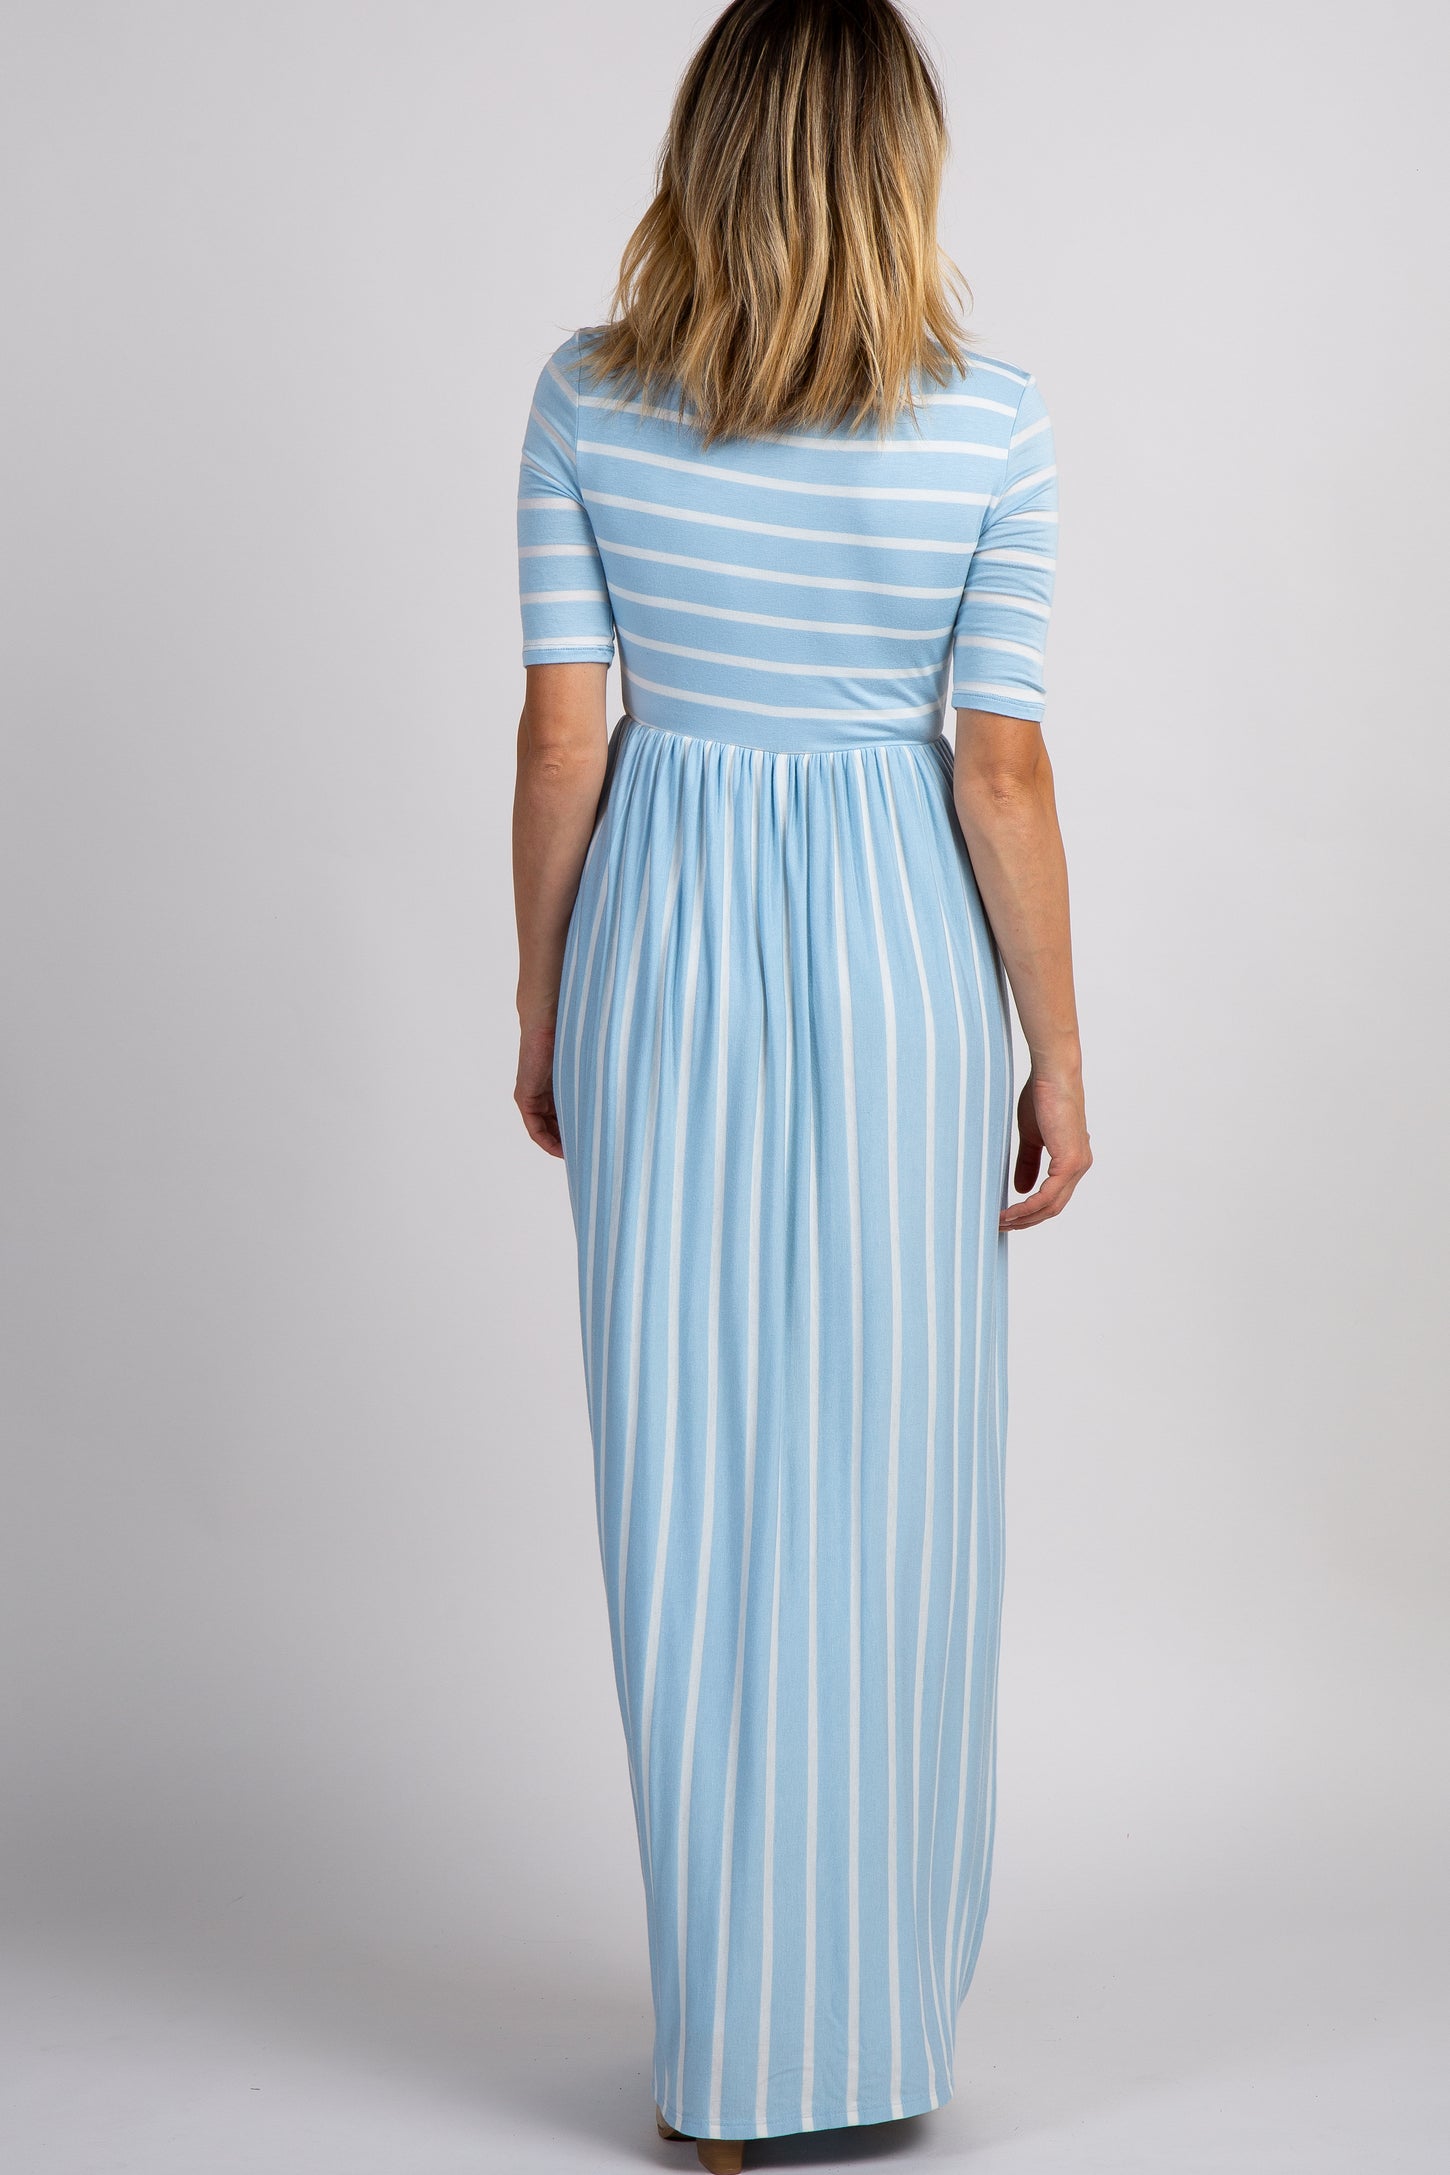 PinkBlush Light Blue Striped Half Sleeve Maxi Dress